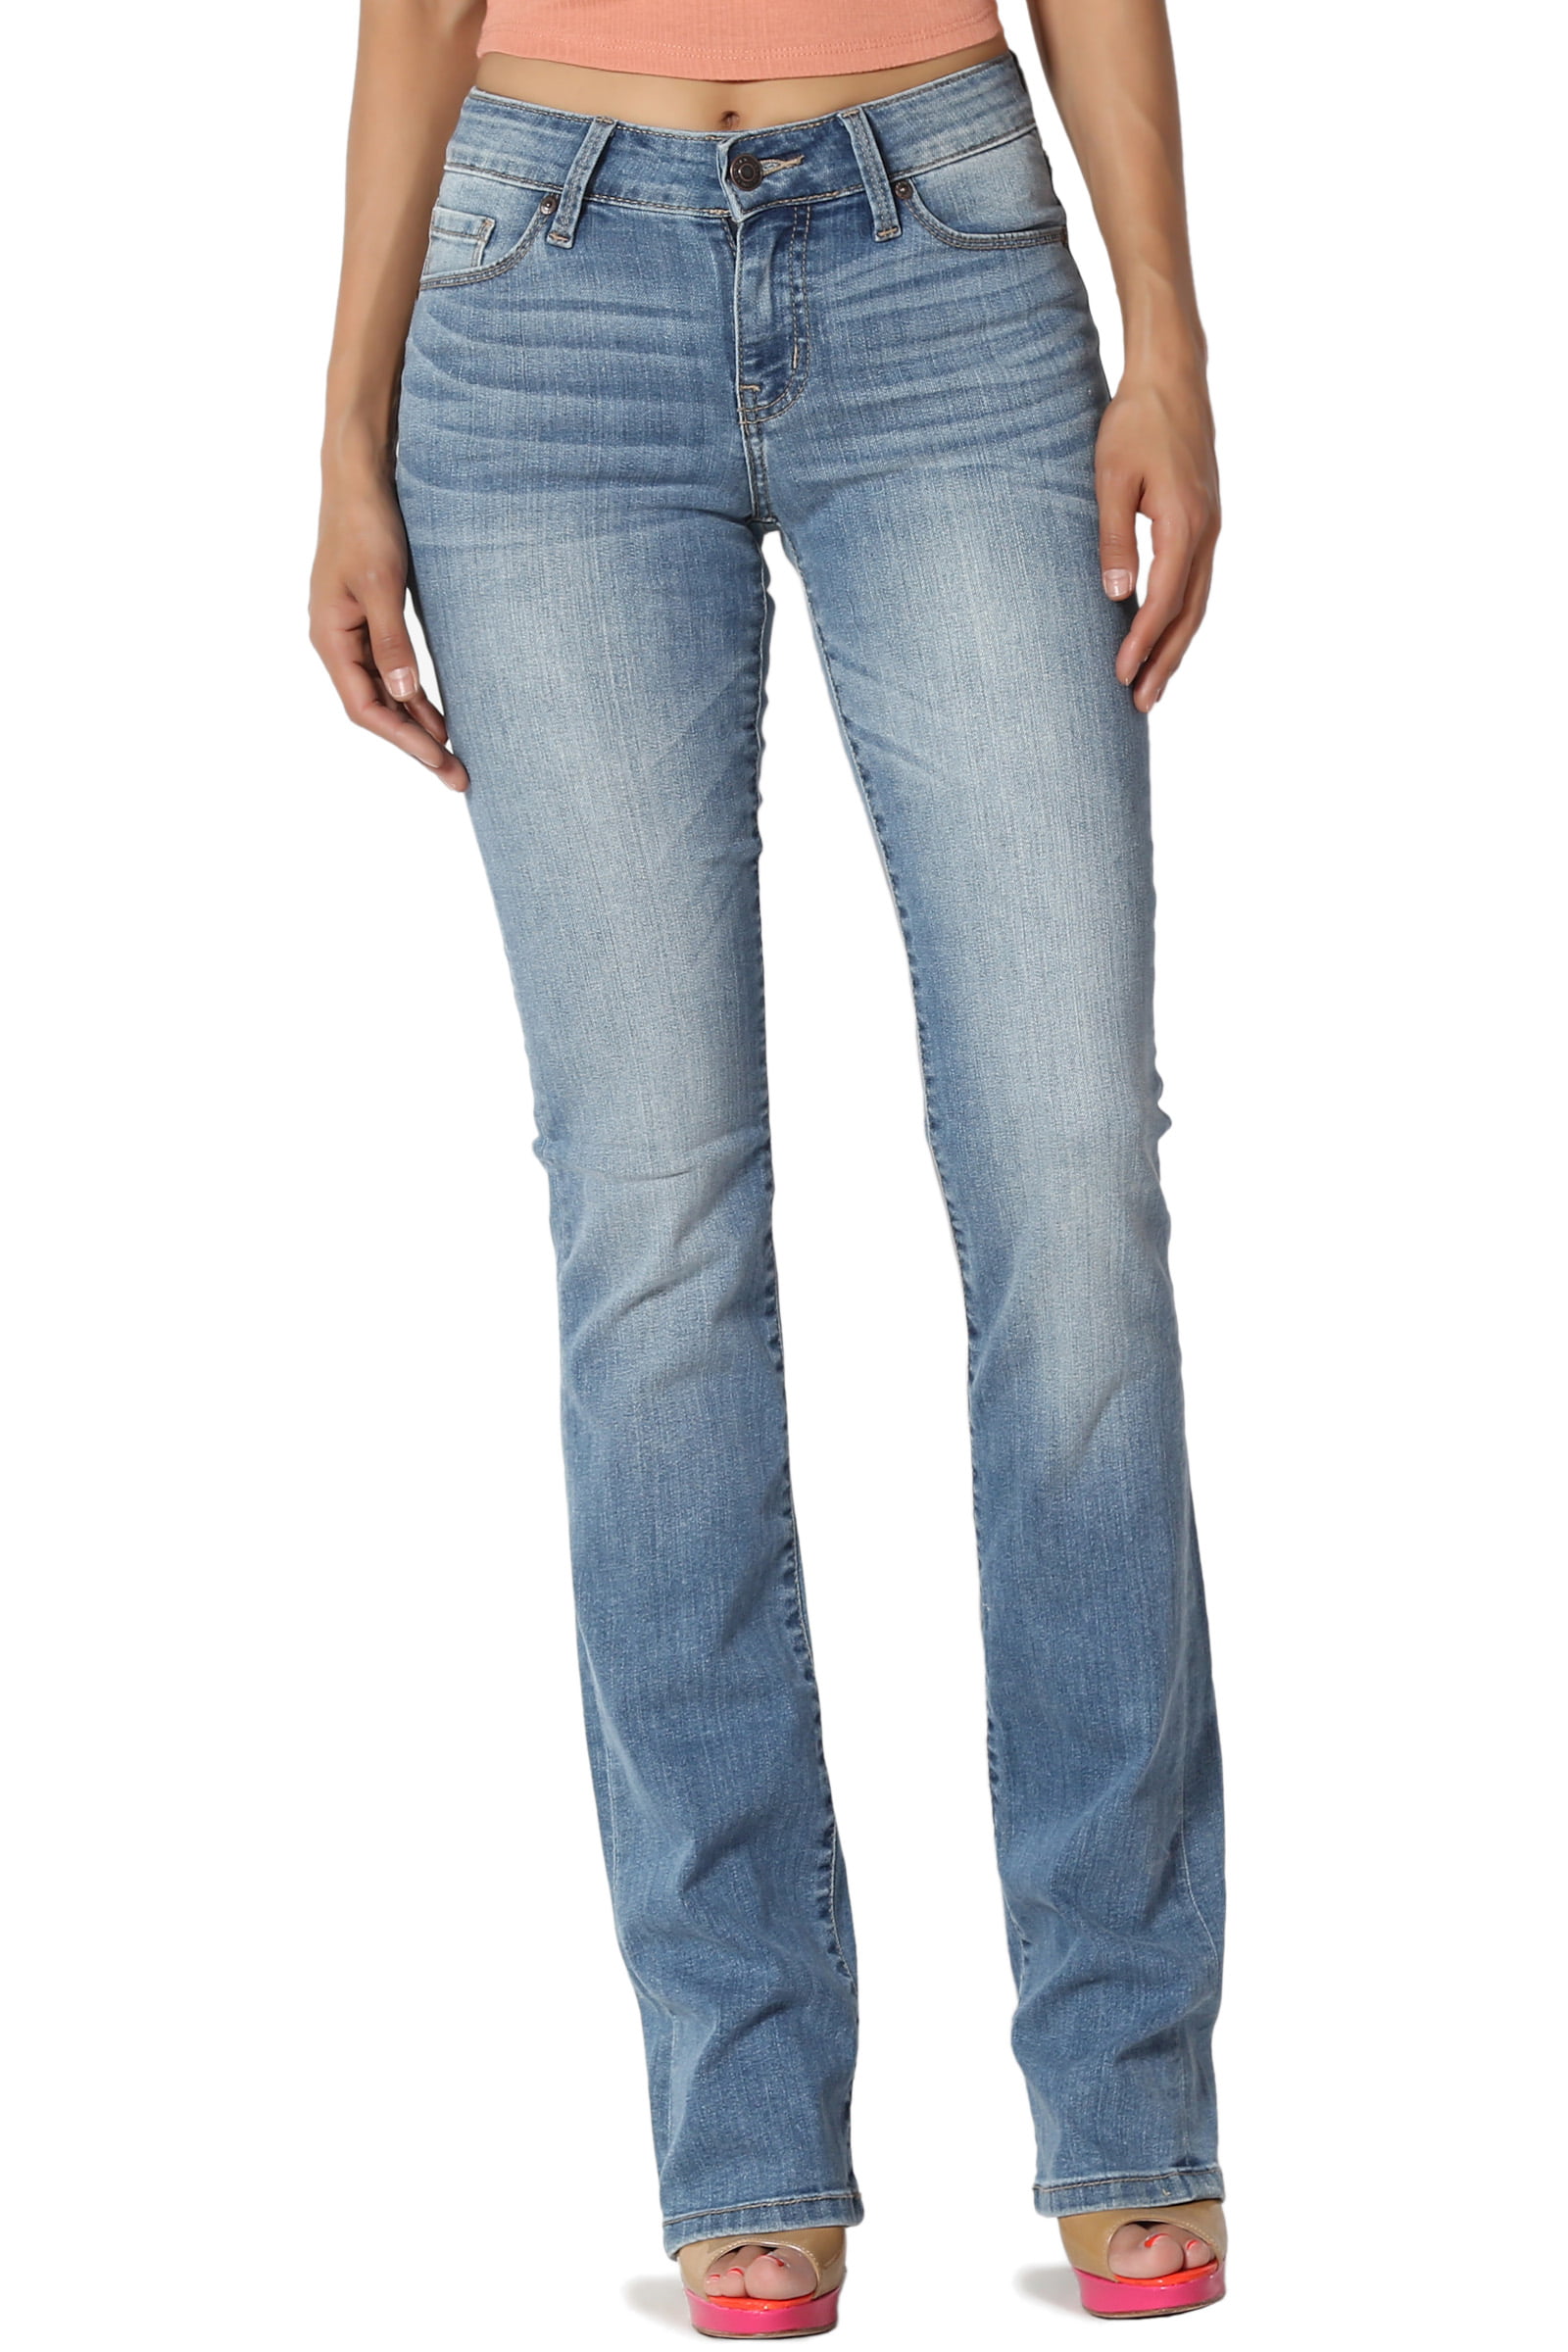 Themogan Women S Mid Rise Slim Fit Bootcut Jeans In Soft Stretch Light Blue Denim Walmart Com